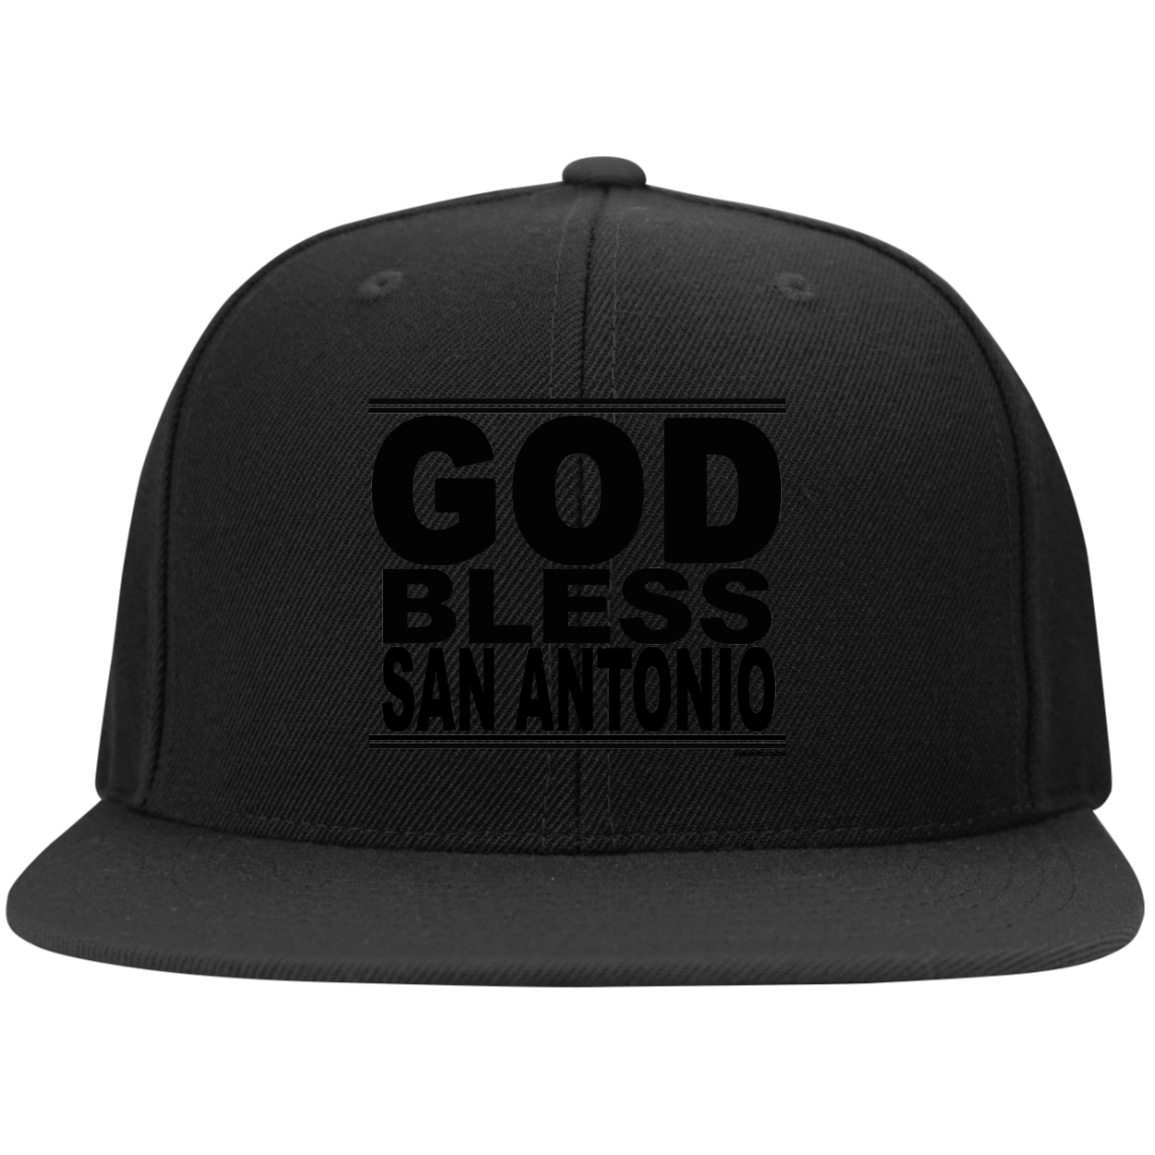 #GodBlessSanAntonio - Snapback Hat